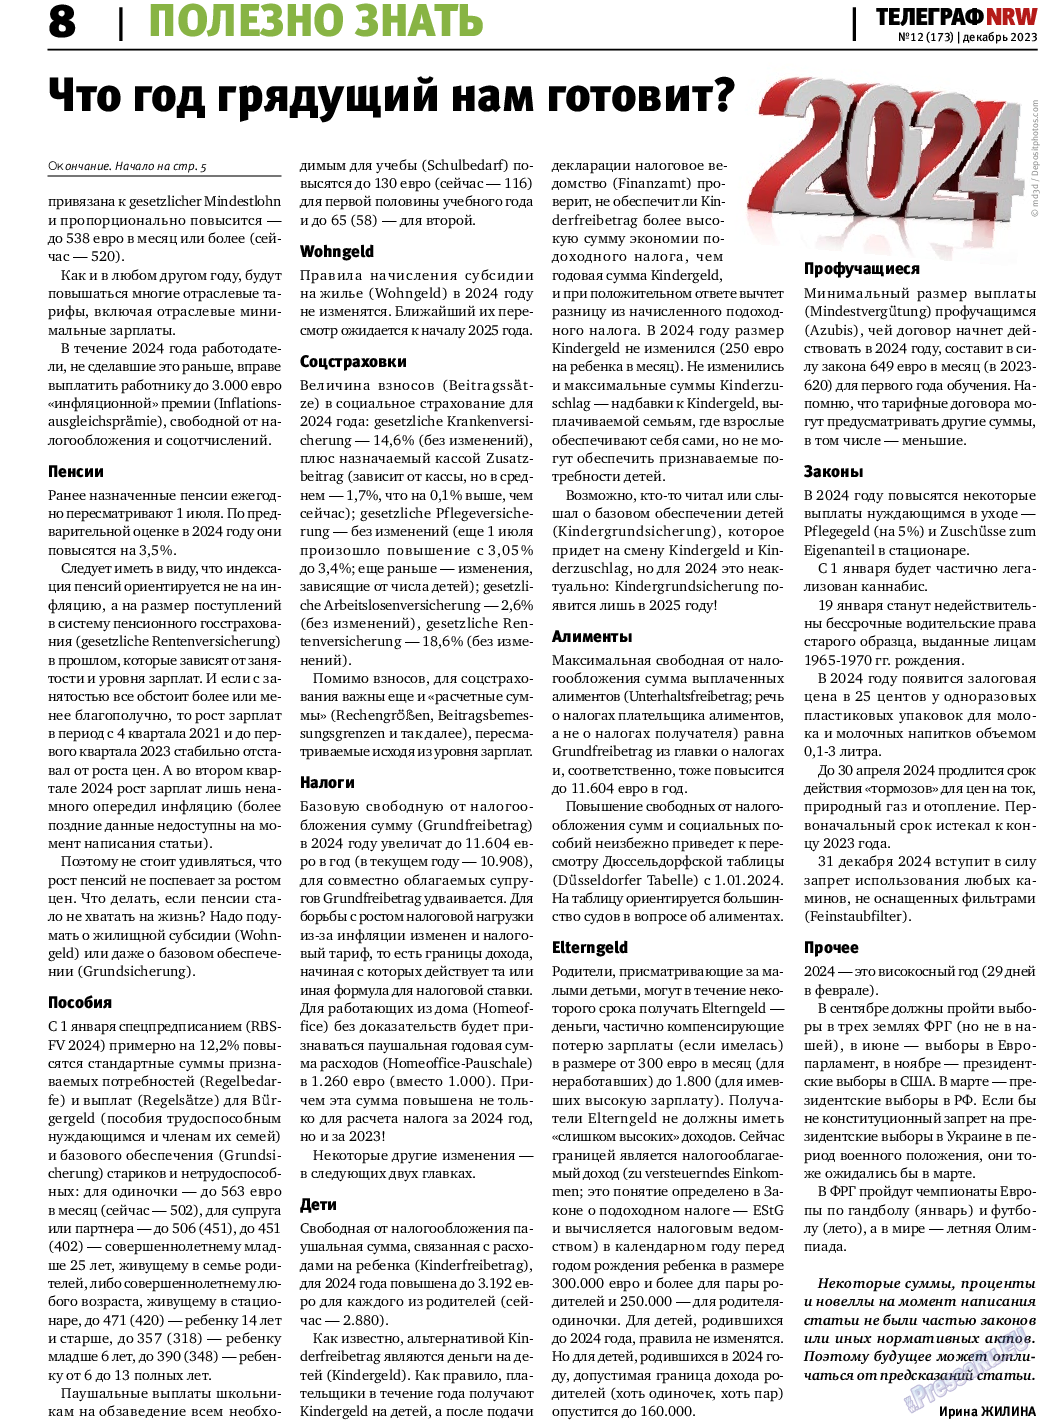 Телеграф NRW, газета. 2023 №173 стр.8